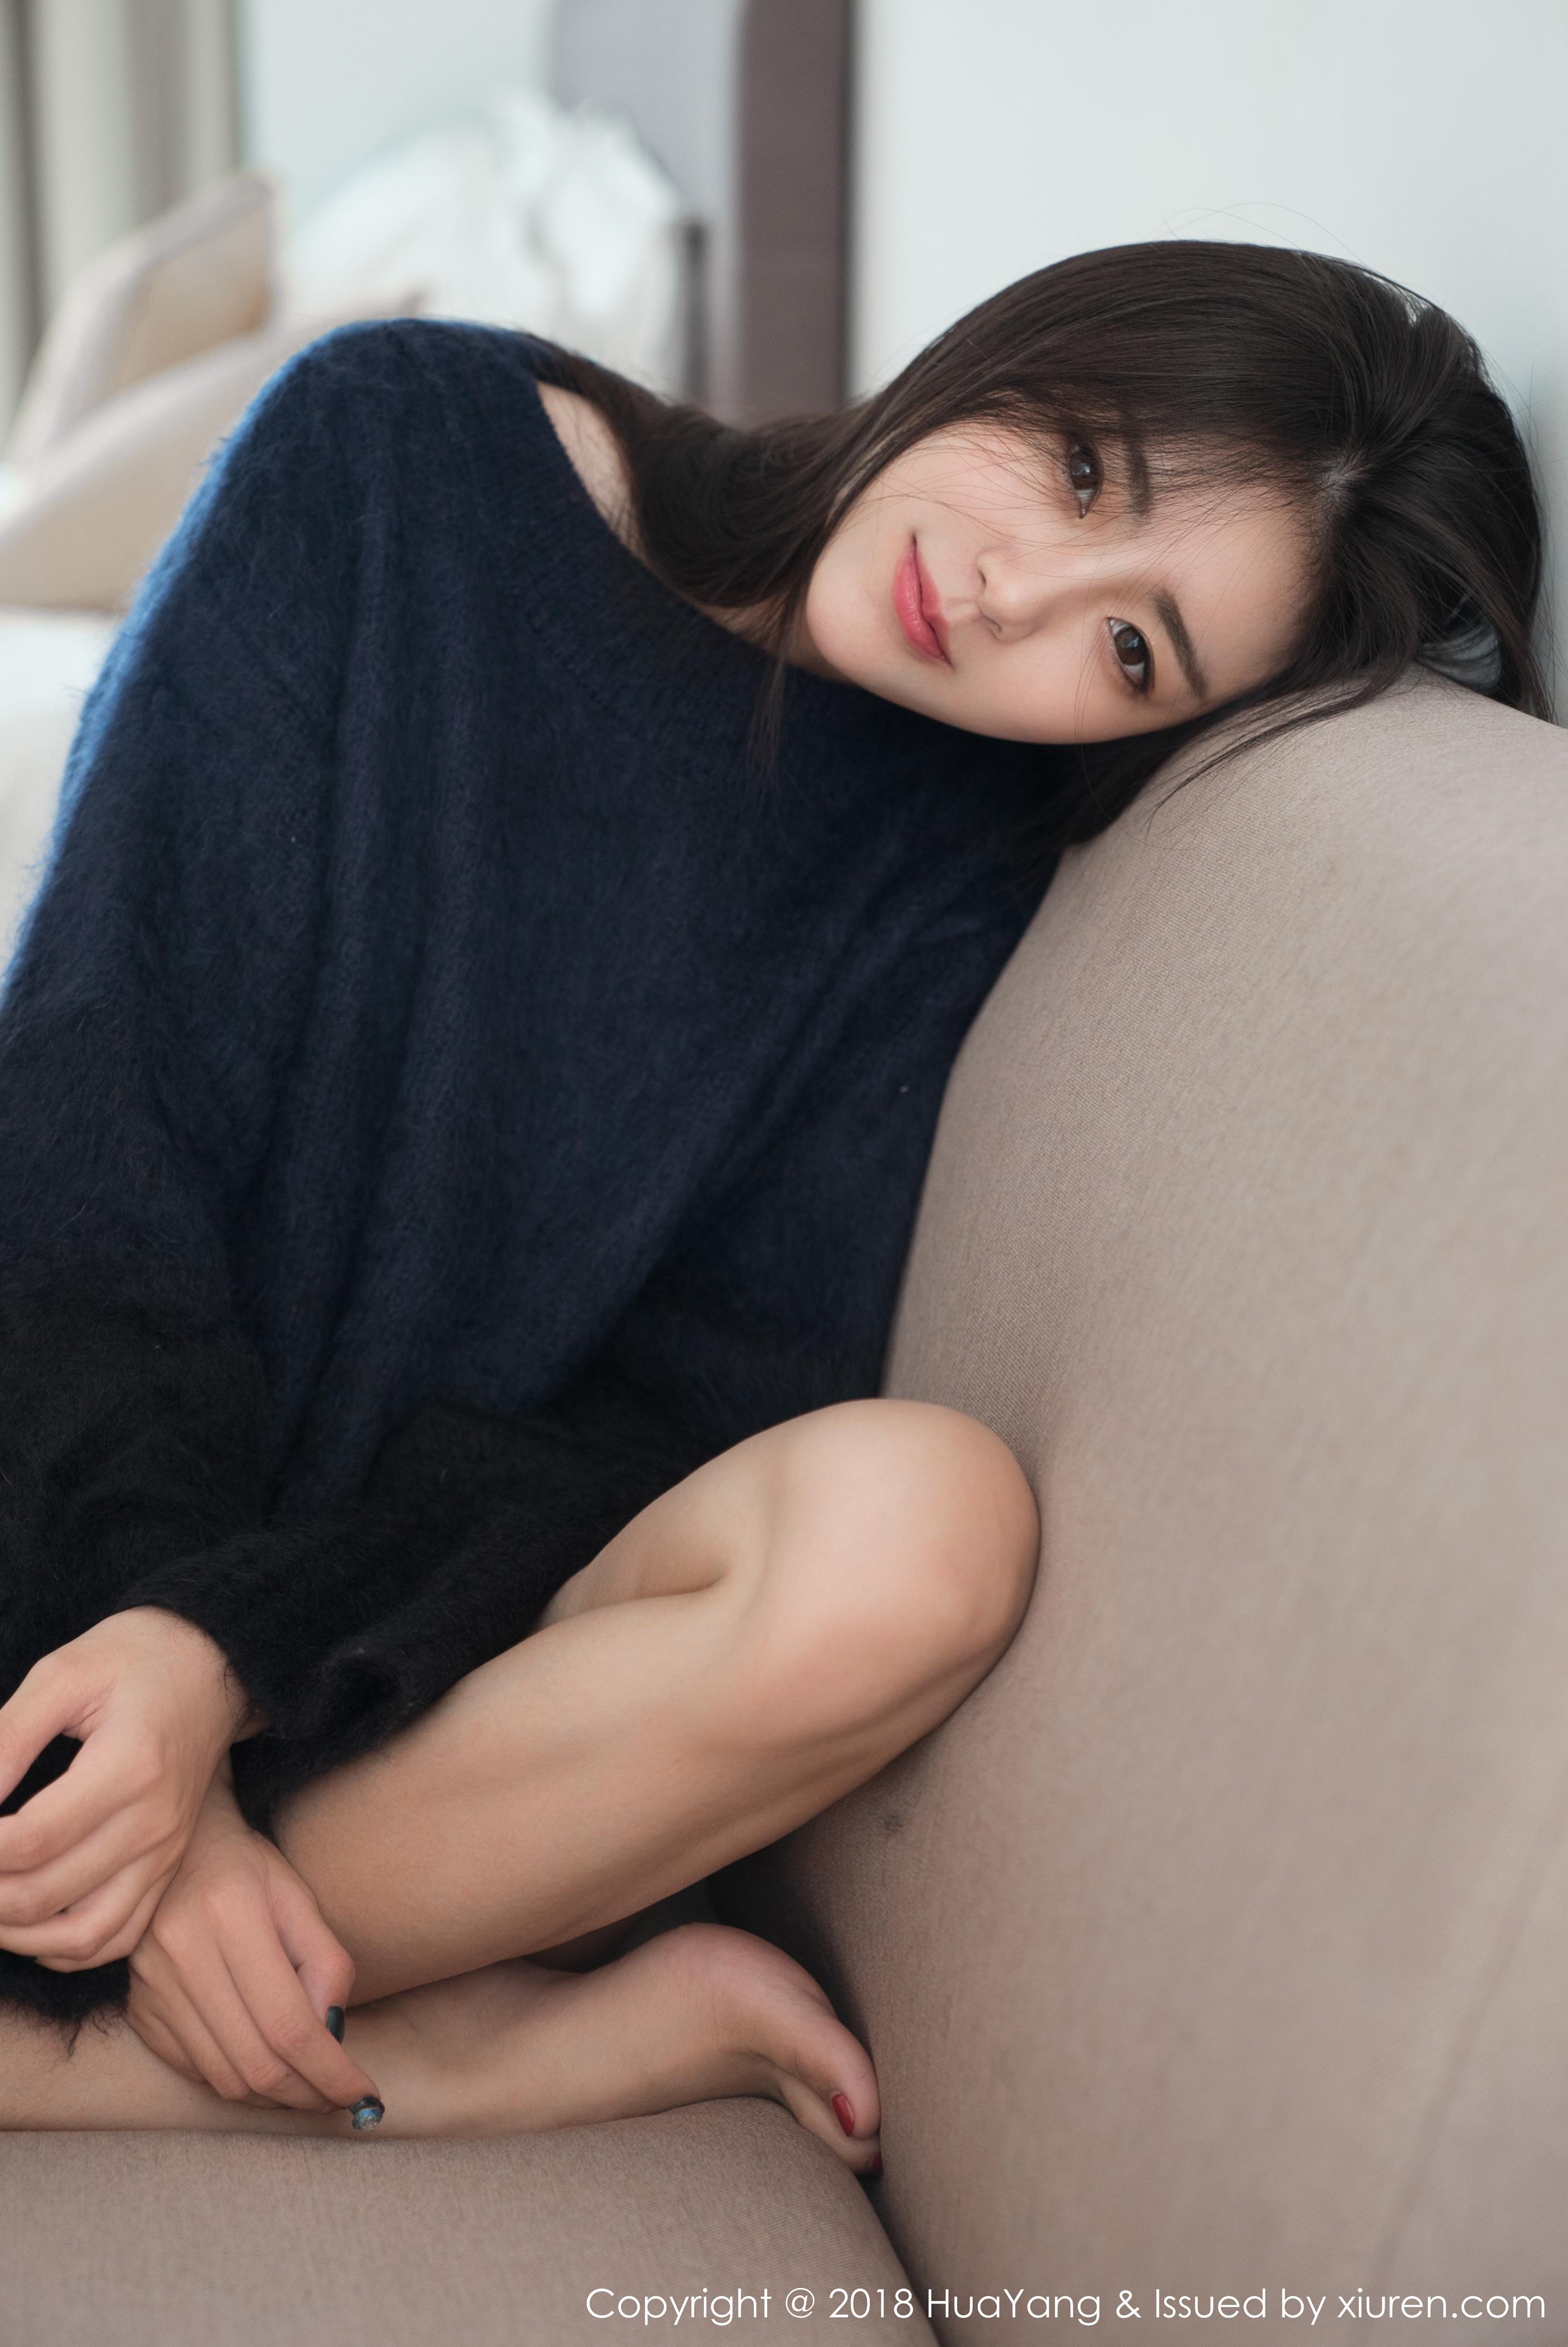 Loose Clothing Sweatshirts Asian Head Tilt Long Hair Legs Women 2018 Year Face Barefoot Women Indoor 2706x4050